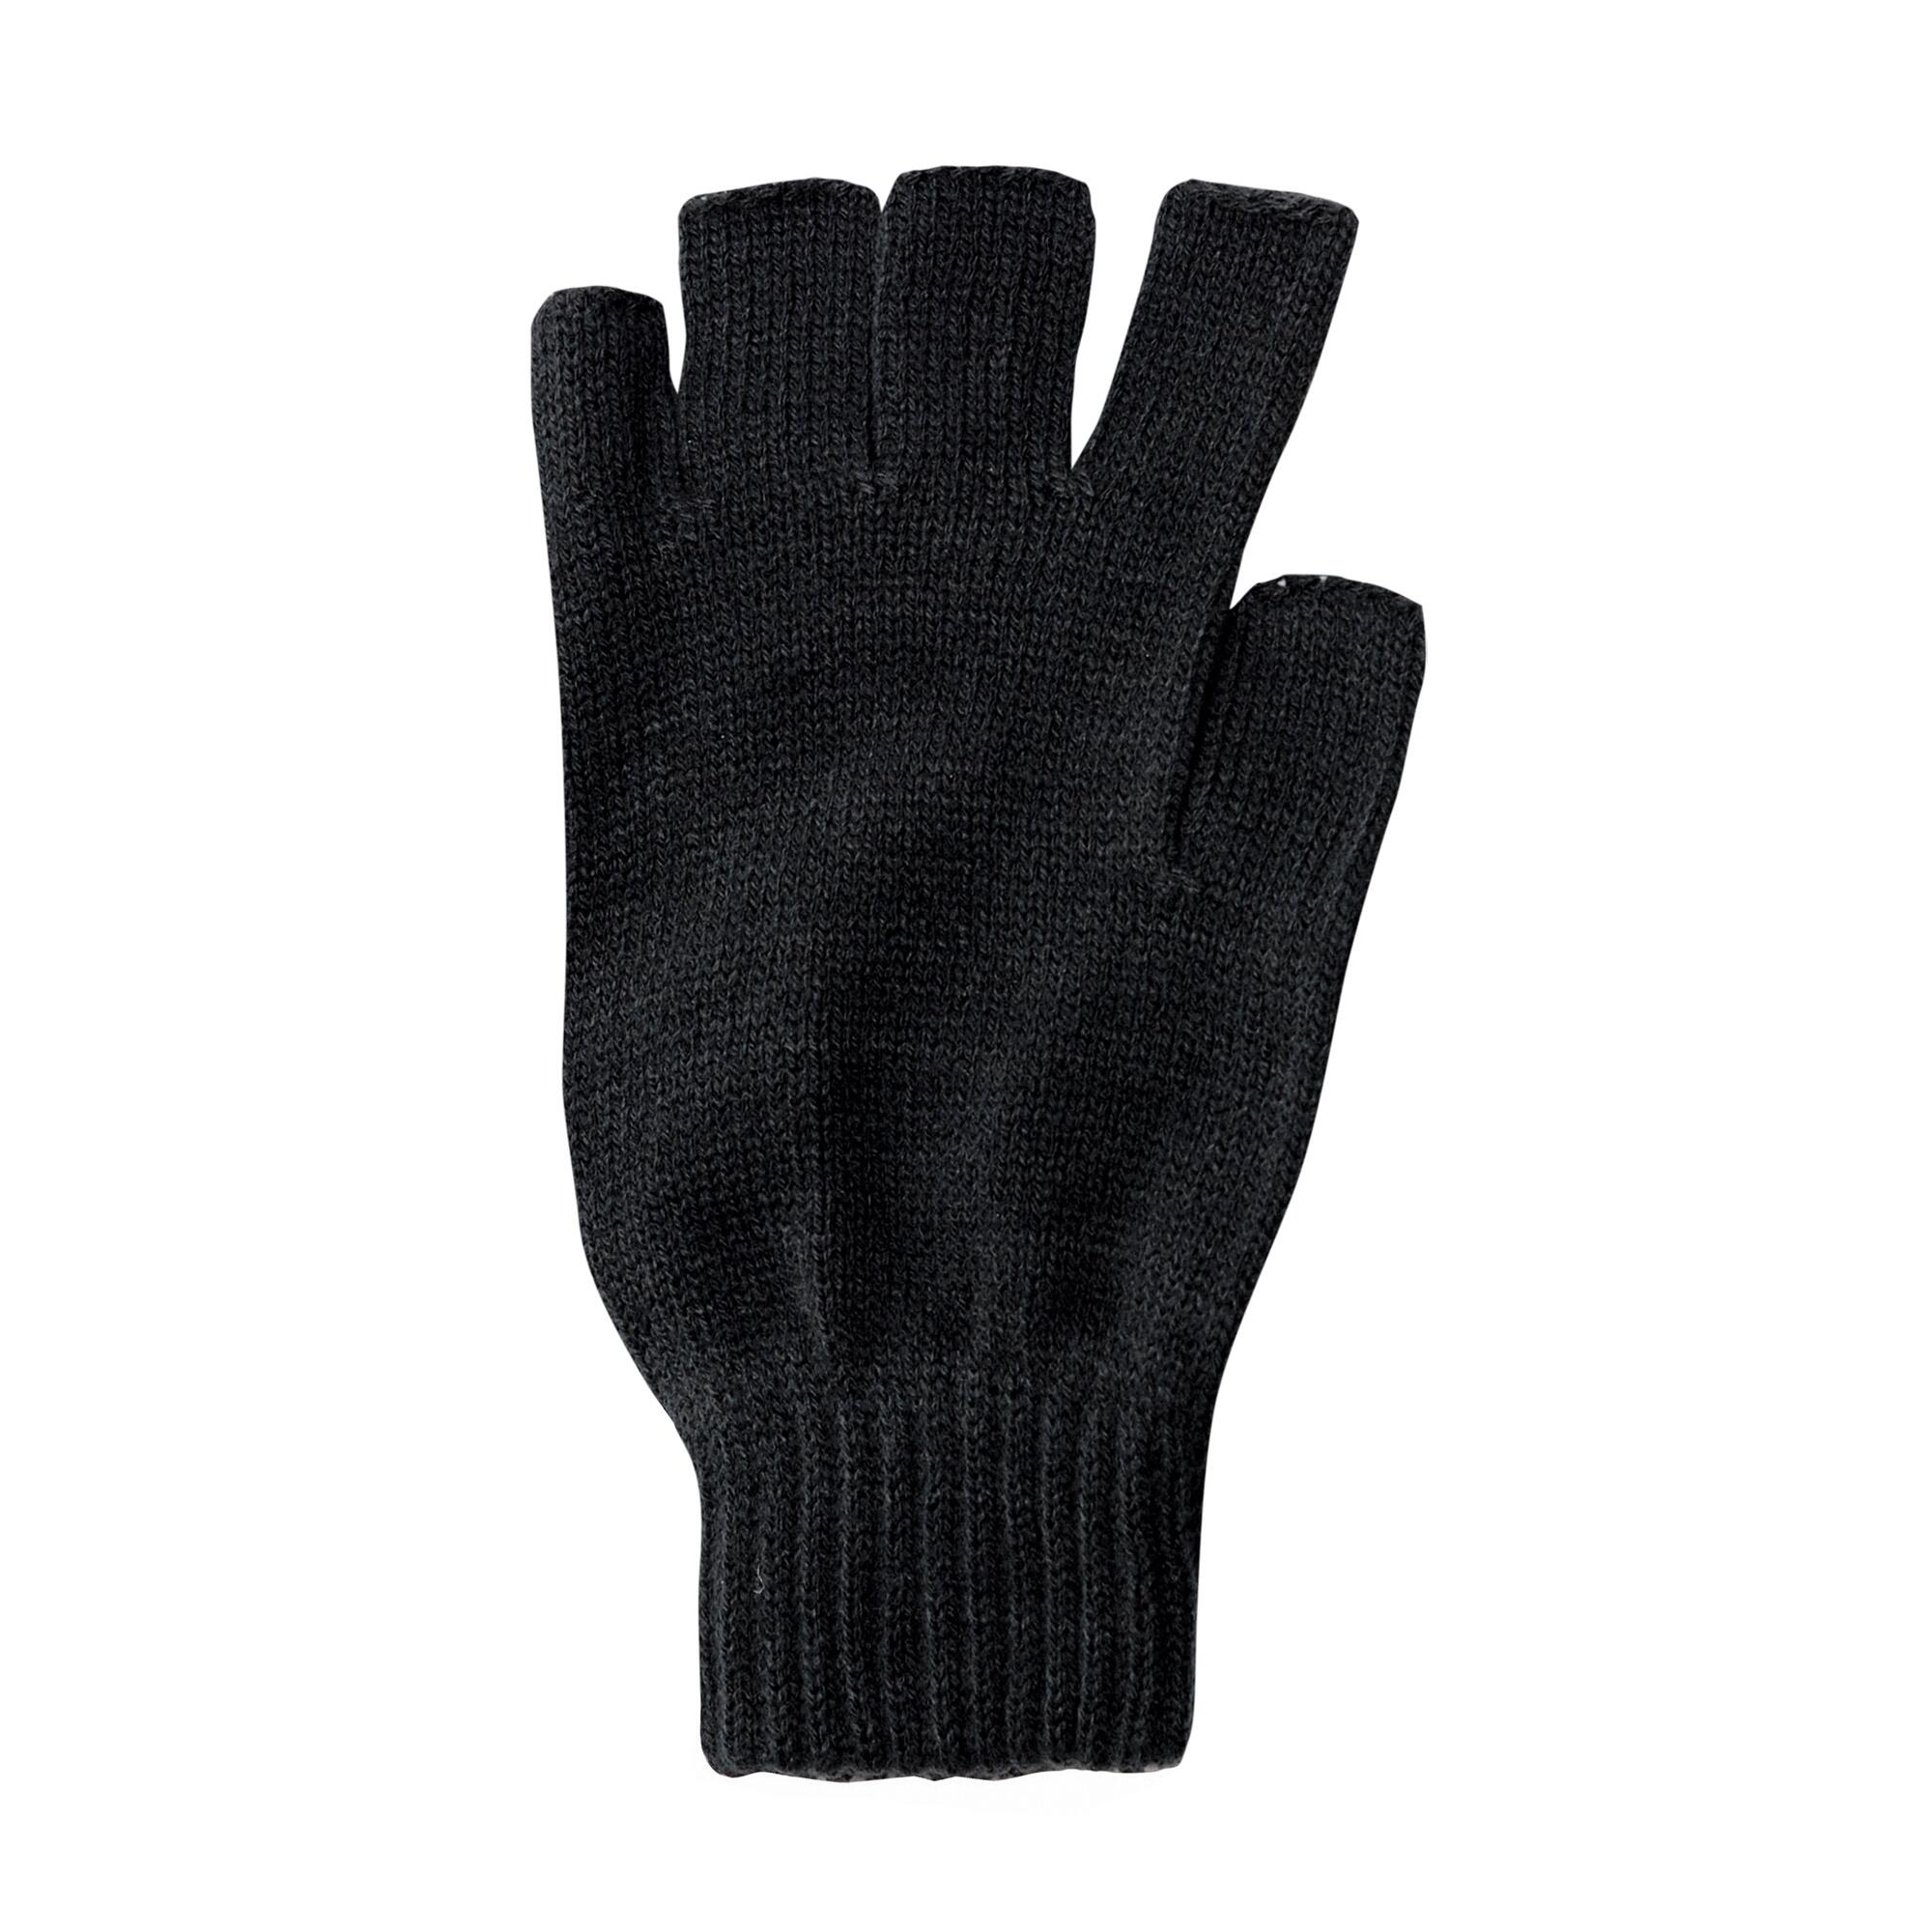 REGATTA Unisex Fingerless Mitts / Gloves (Black)